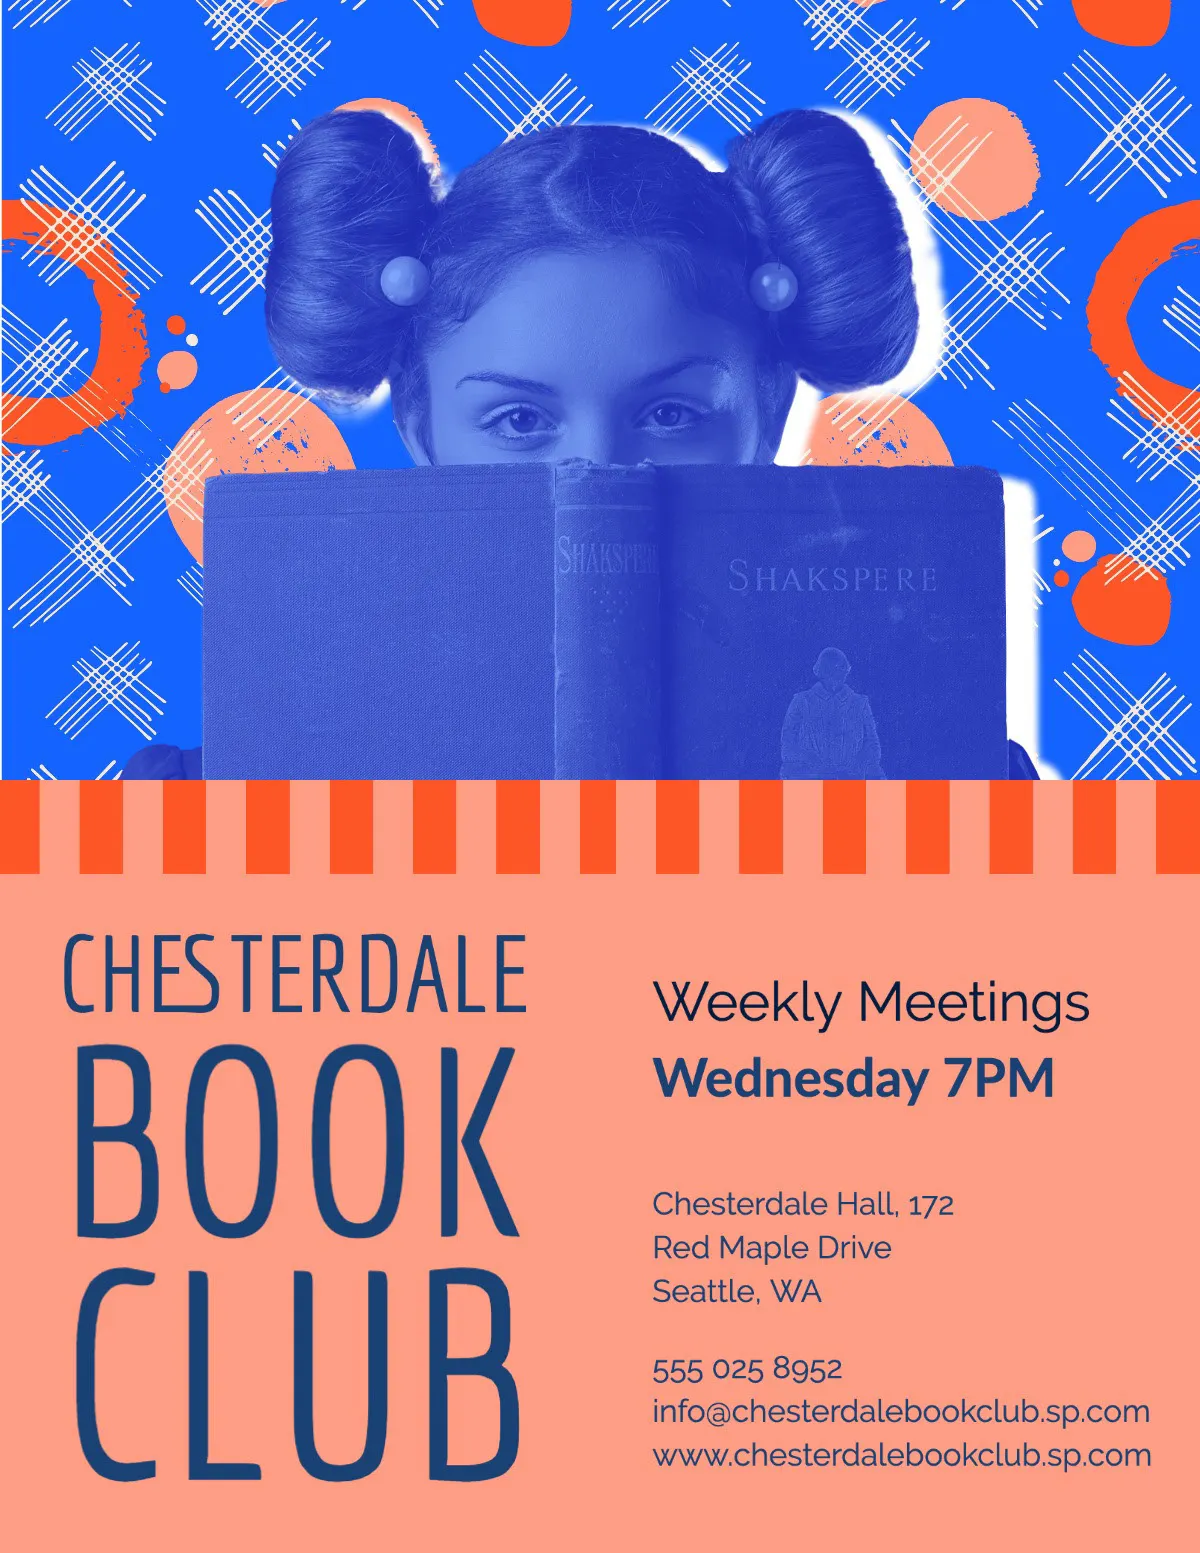 Orange, Red & Blue Book Club Flyer